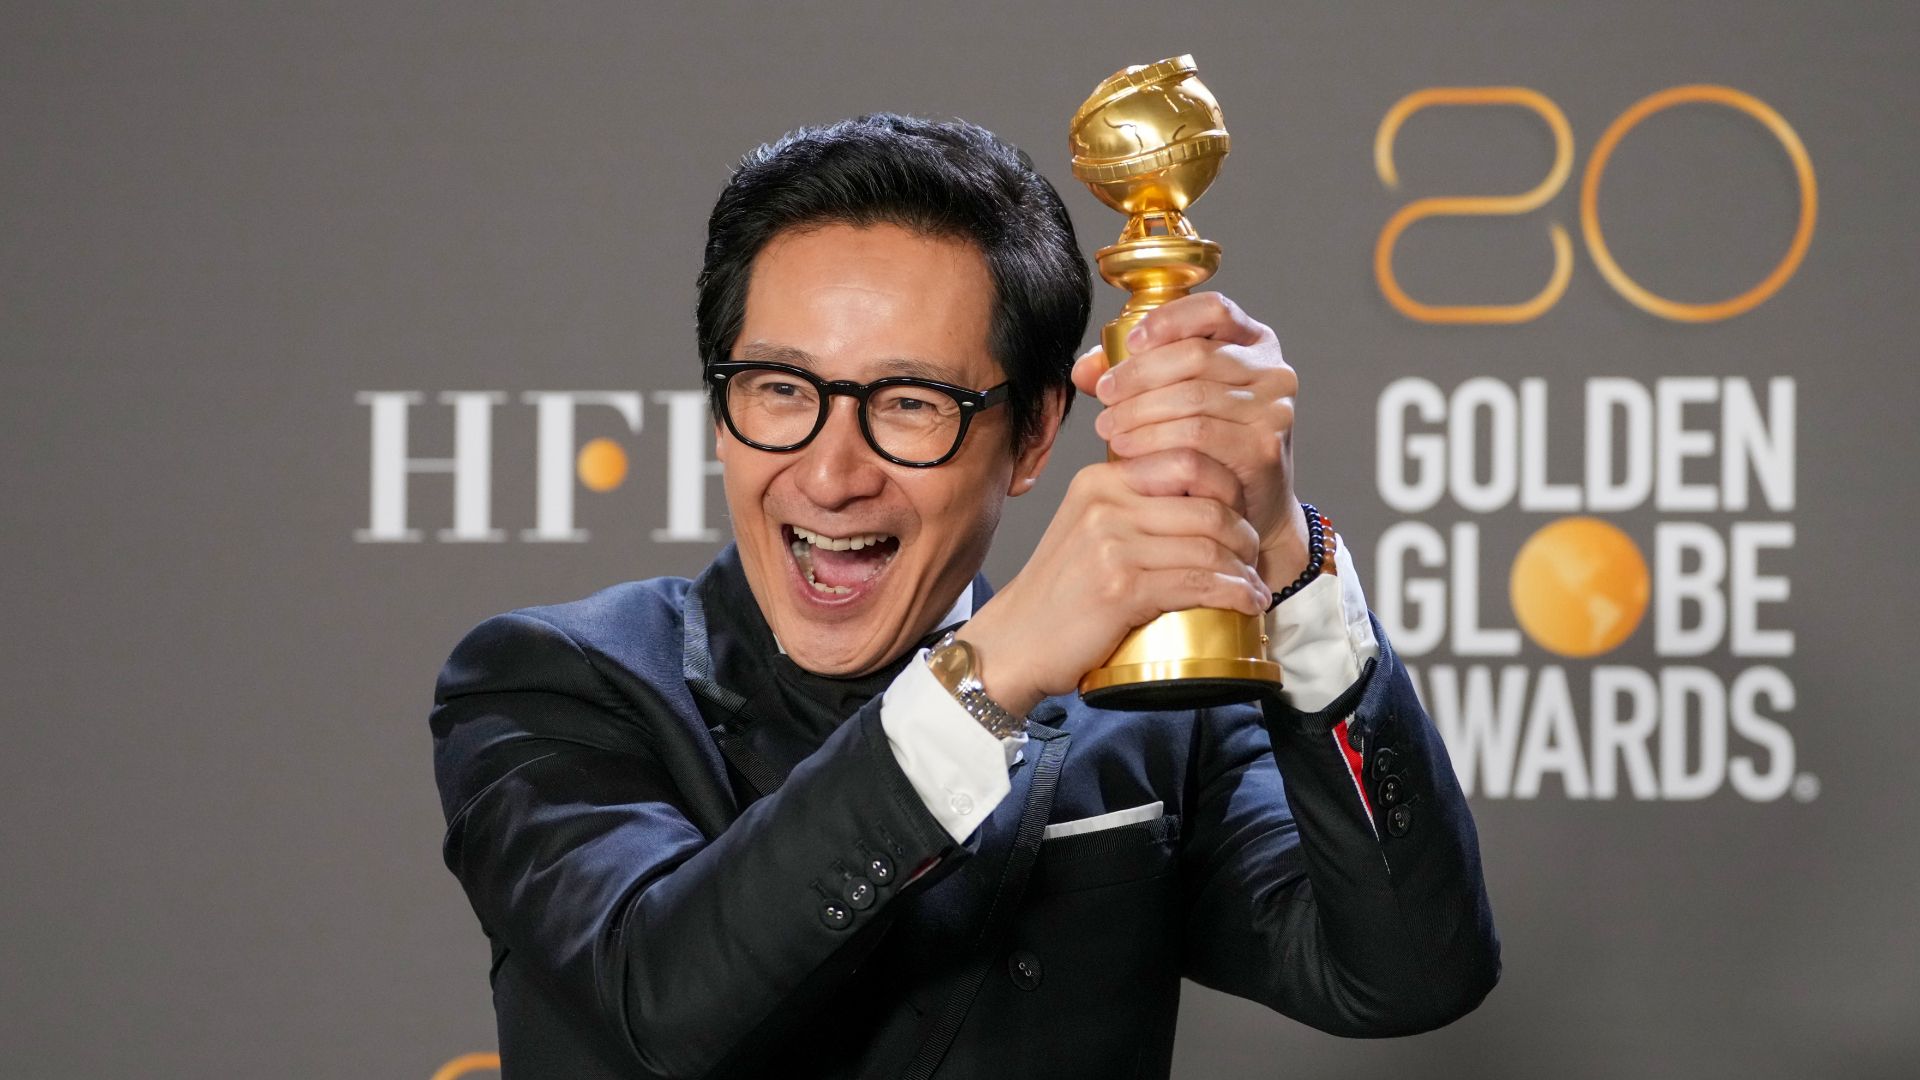 Ke Huy Quan delivers an unmissable Golden Globes acceptance speech that